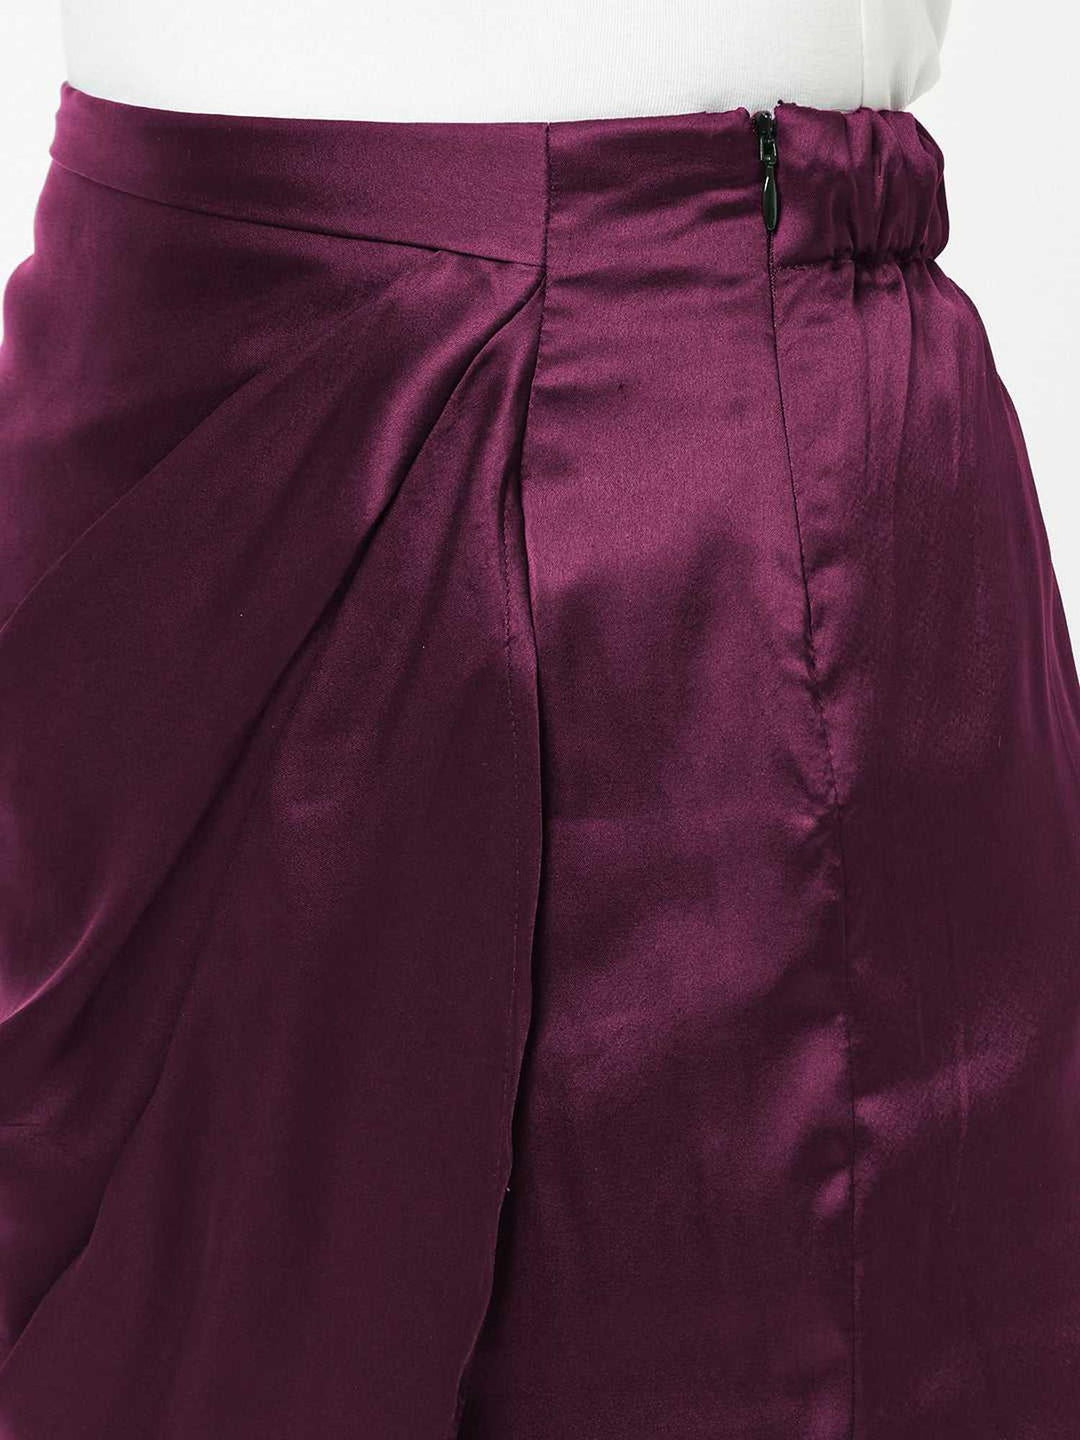 shiny satin wine pleated wrap skirt